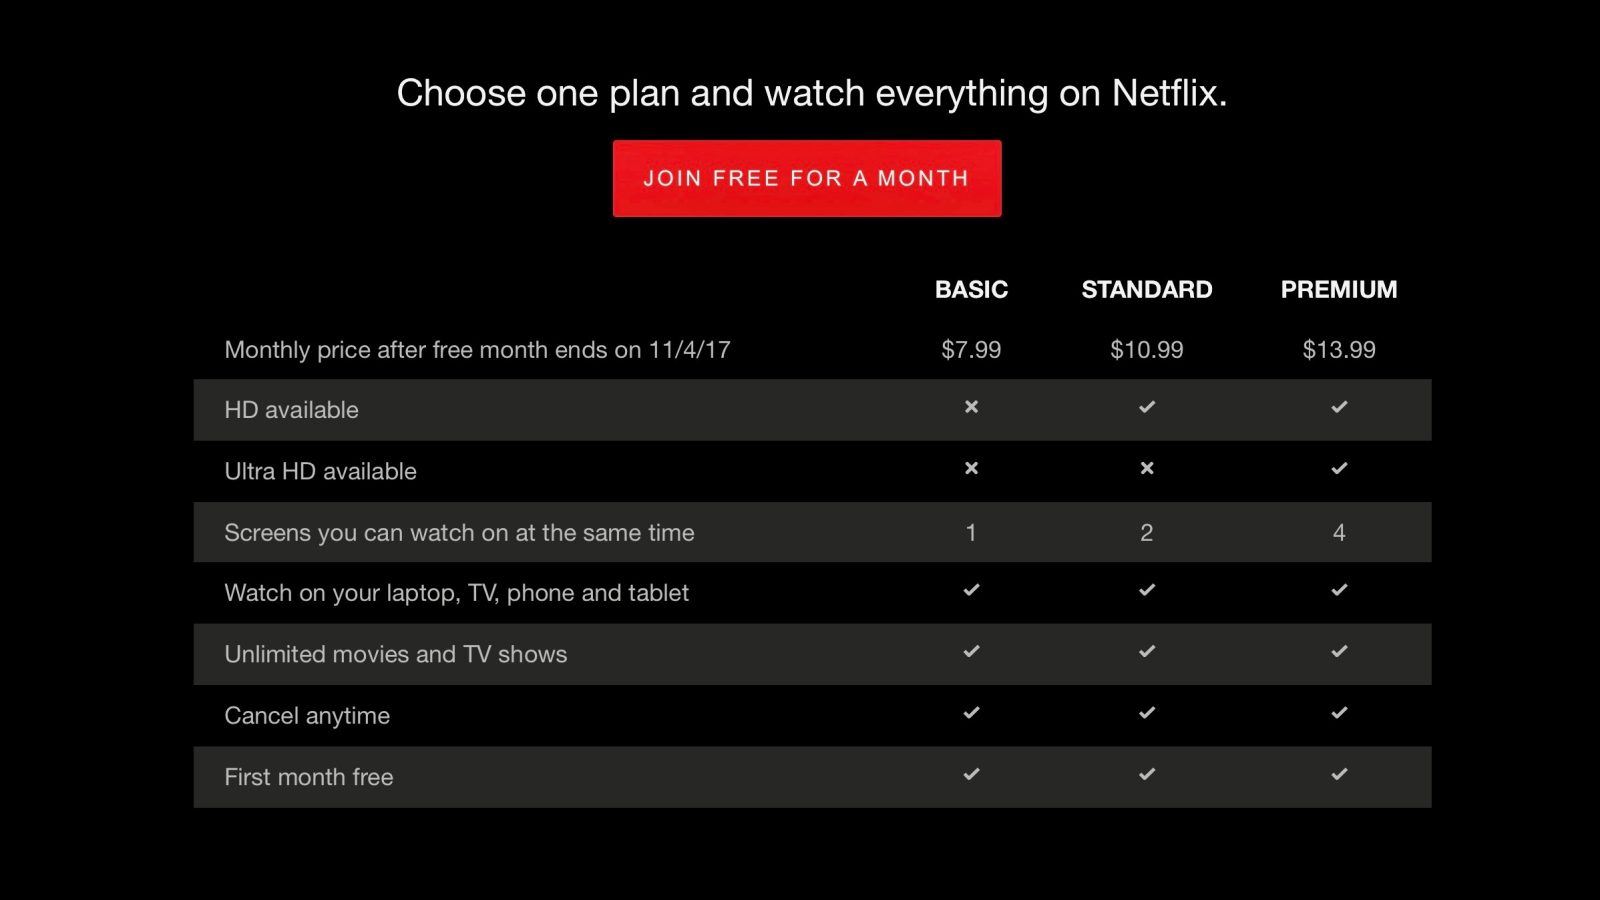 Netflix Plans - How Much Does Netflix Cost?